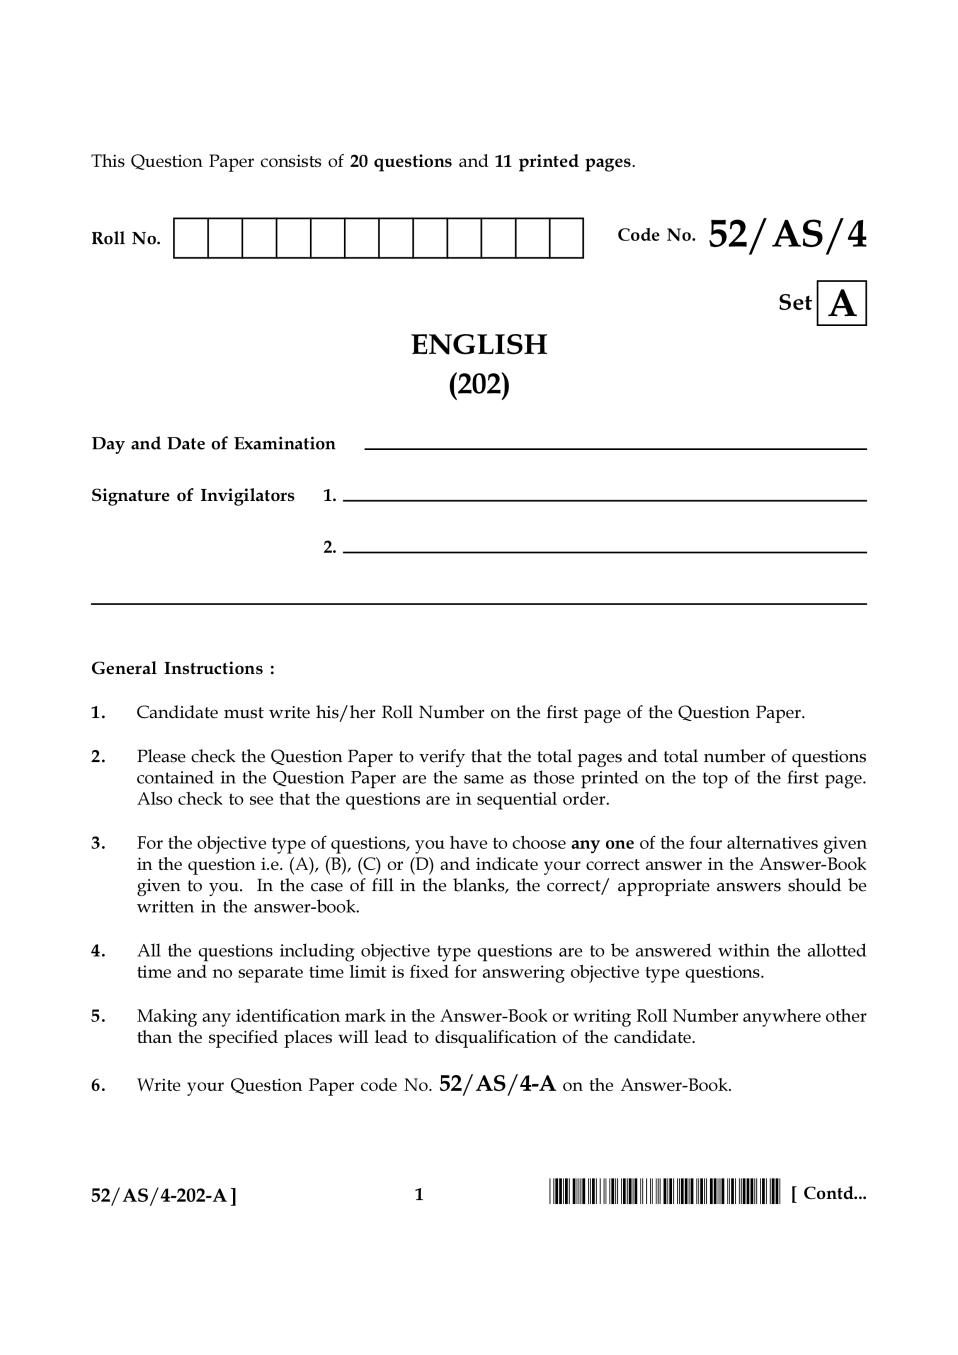 NIOS Class 10 Question Paper Apr 2016 - English - Page 1